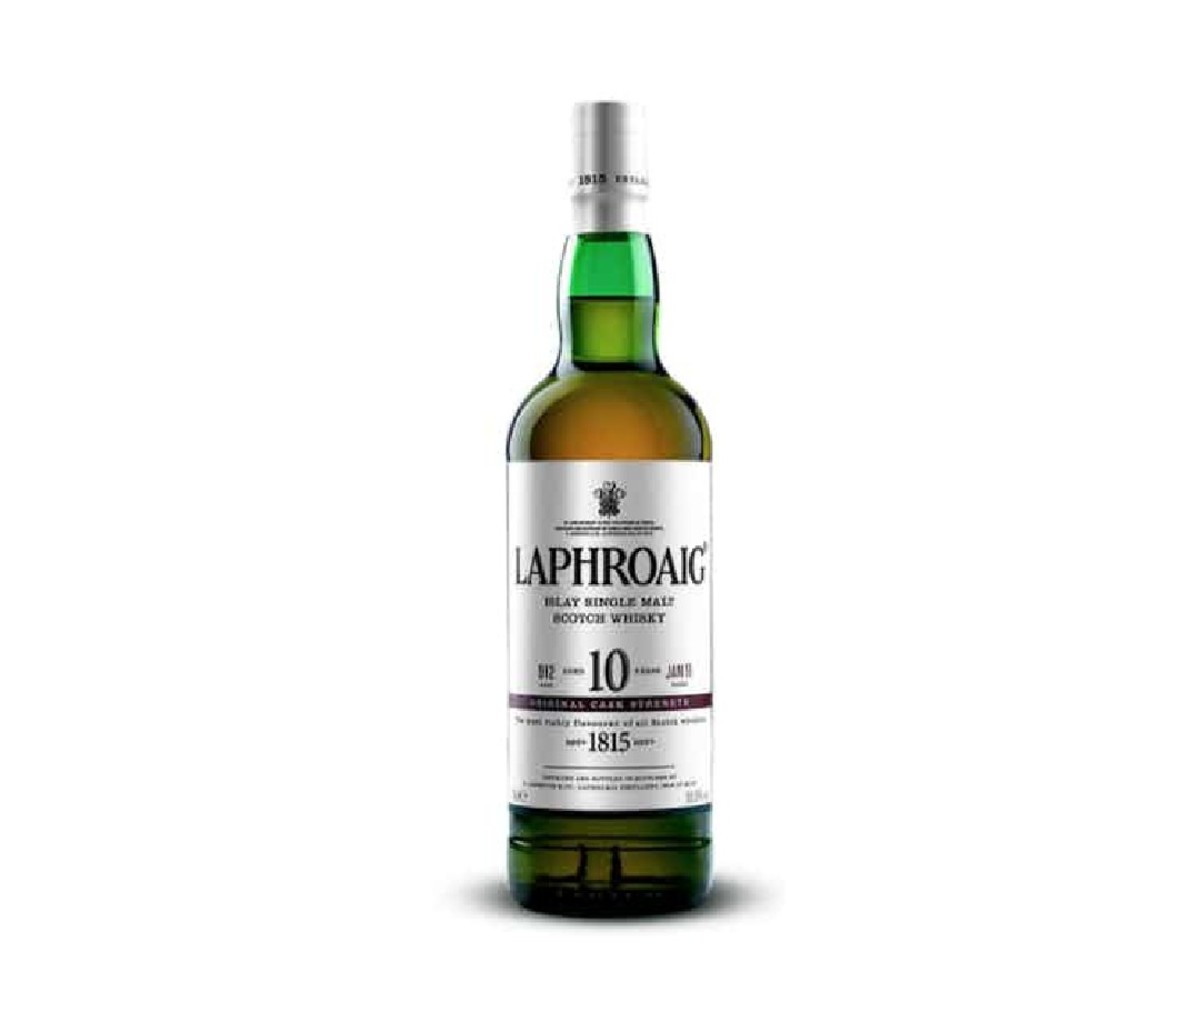 A bottle of Laphroaig 10-Year-Old Cask Strength Single Malt Scotch Whisky.